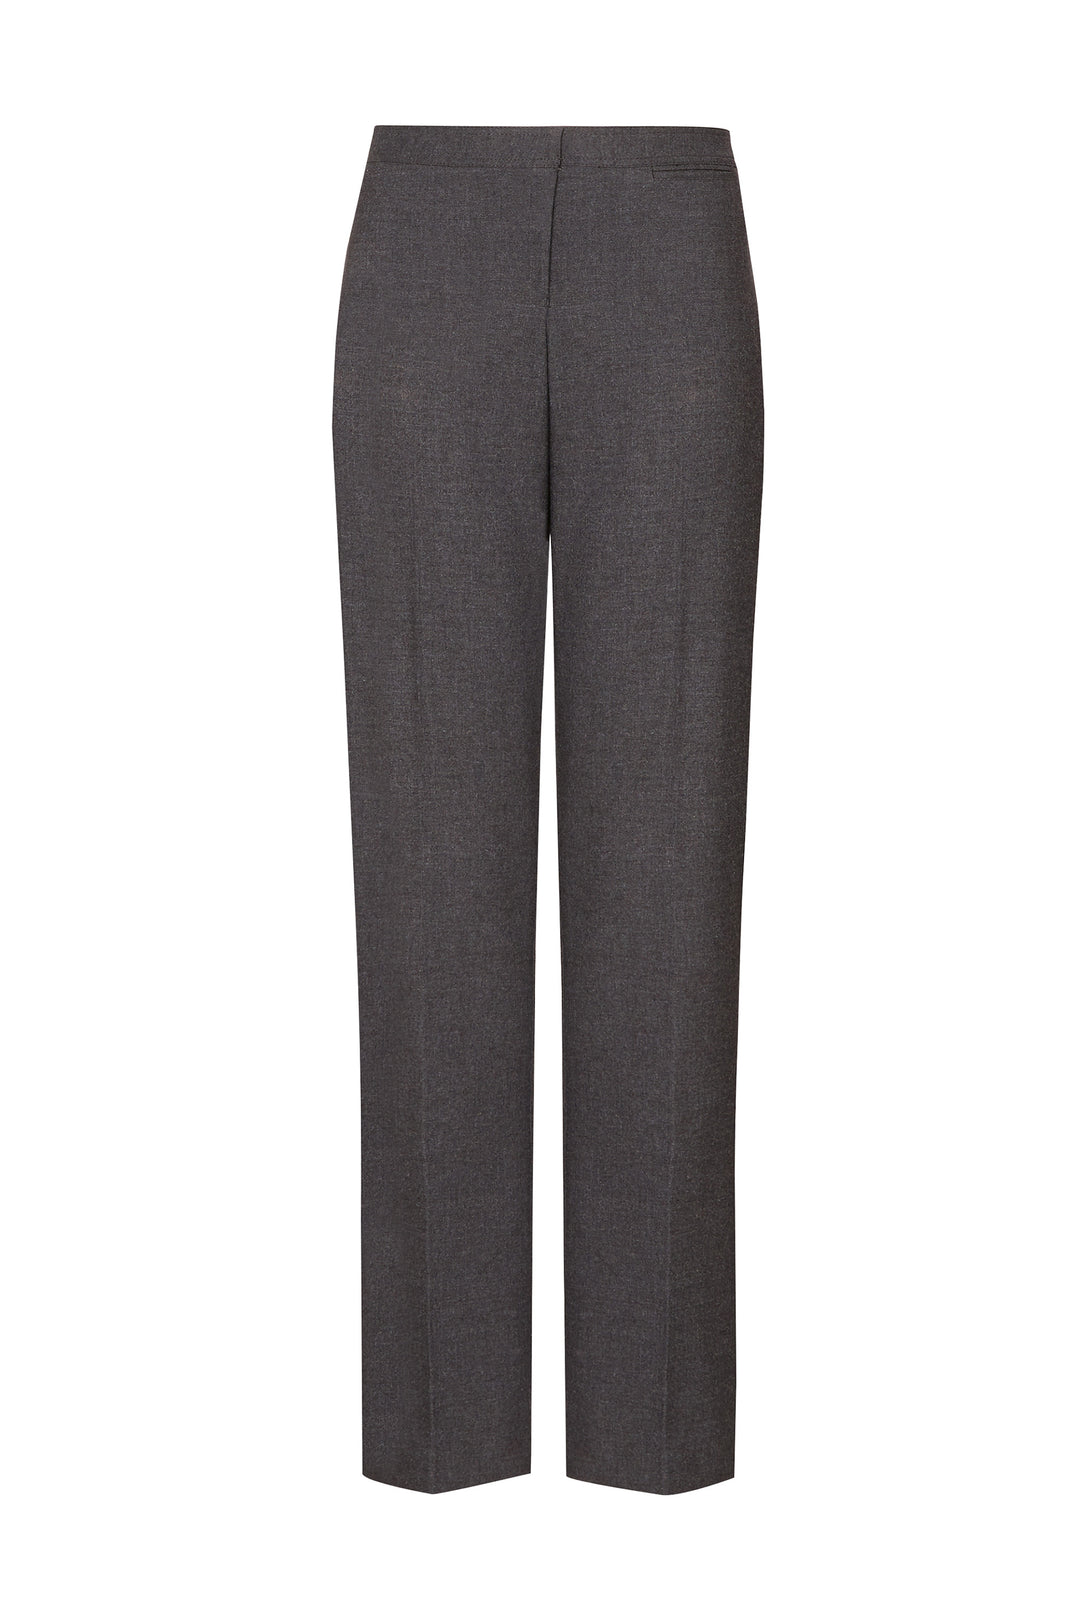 Senior Girls' Regular Fit School Trousers - Grey